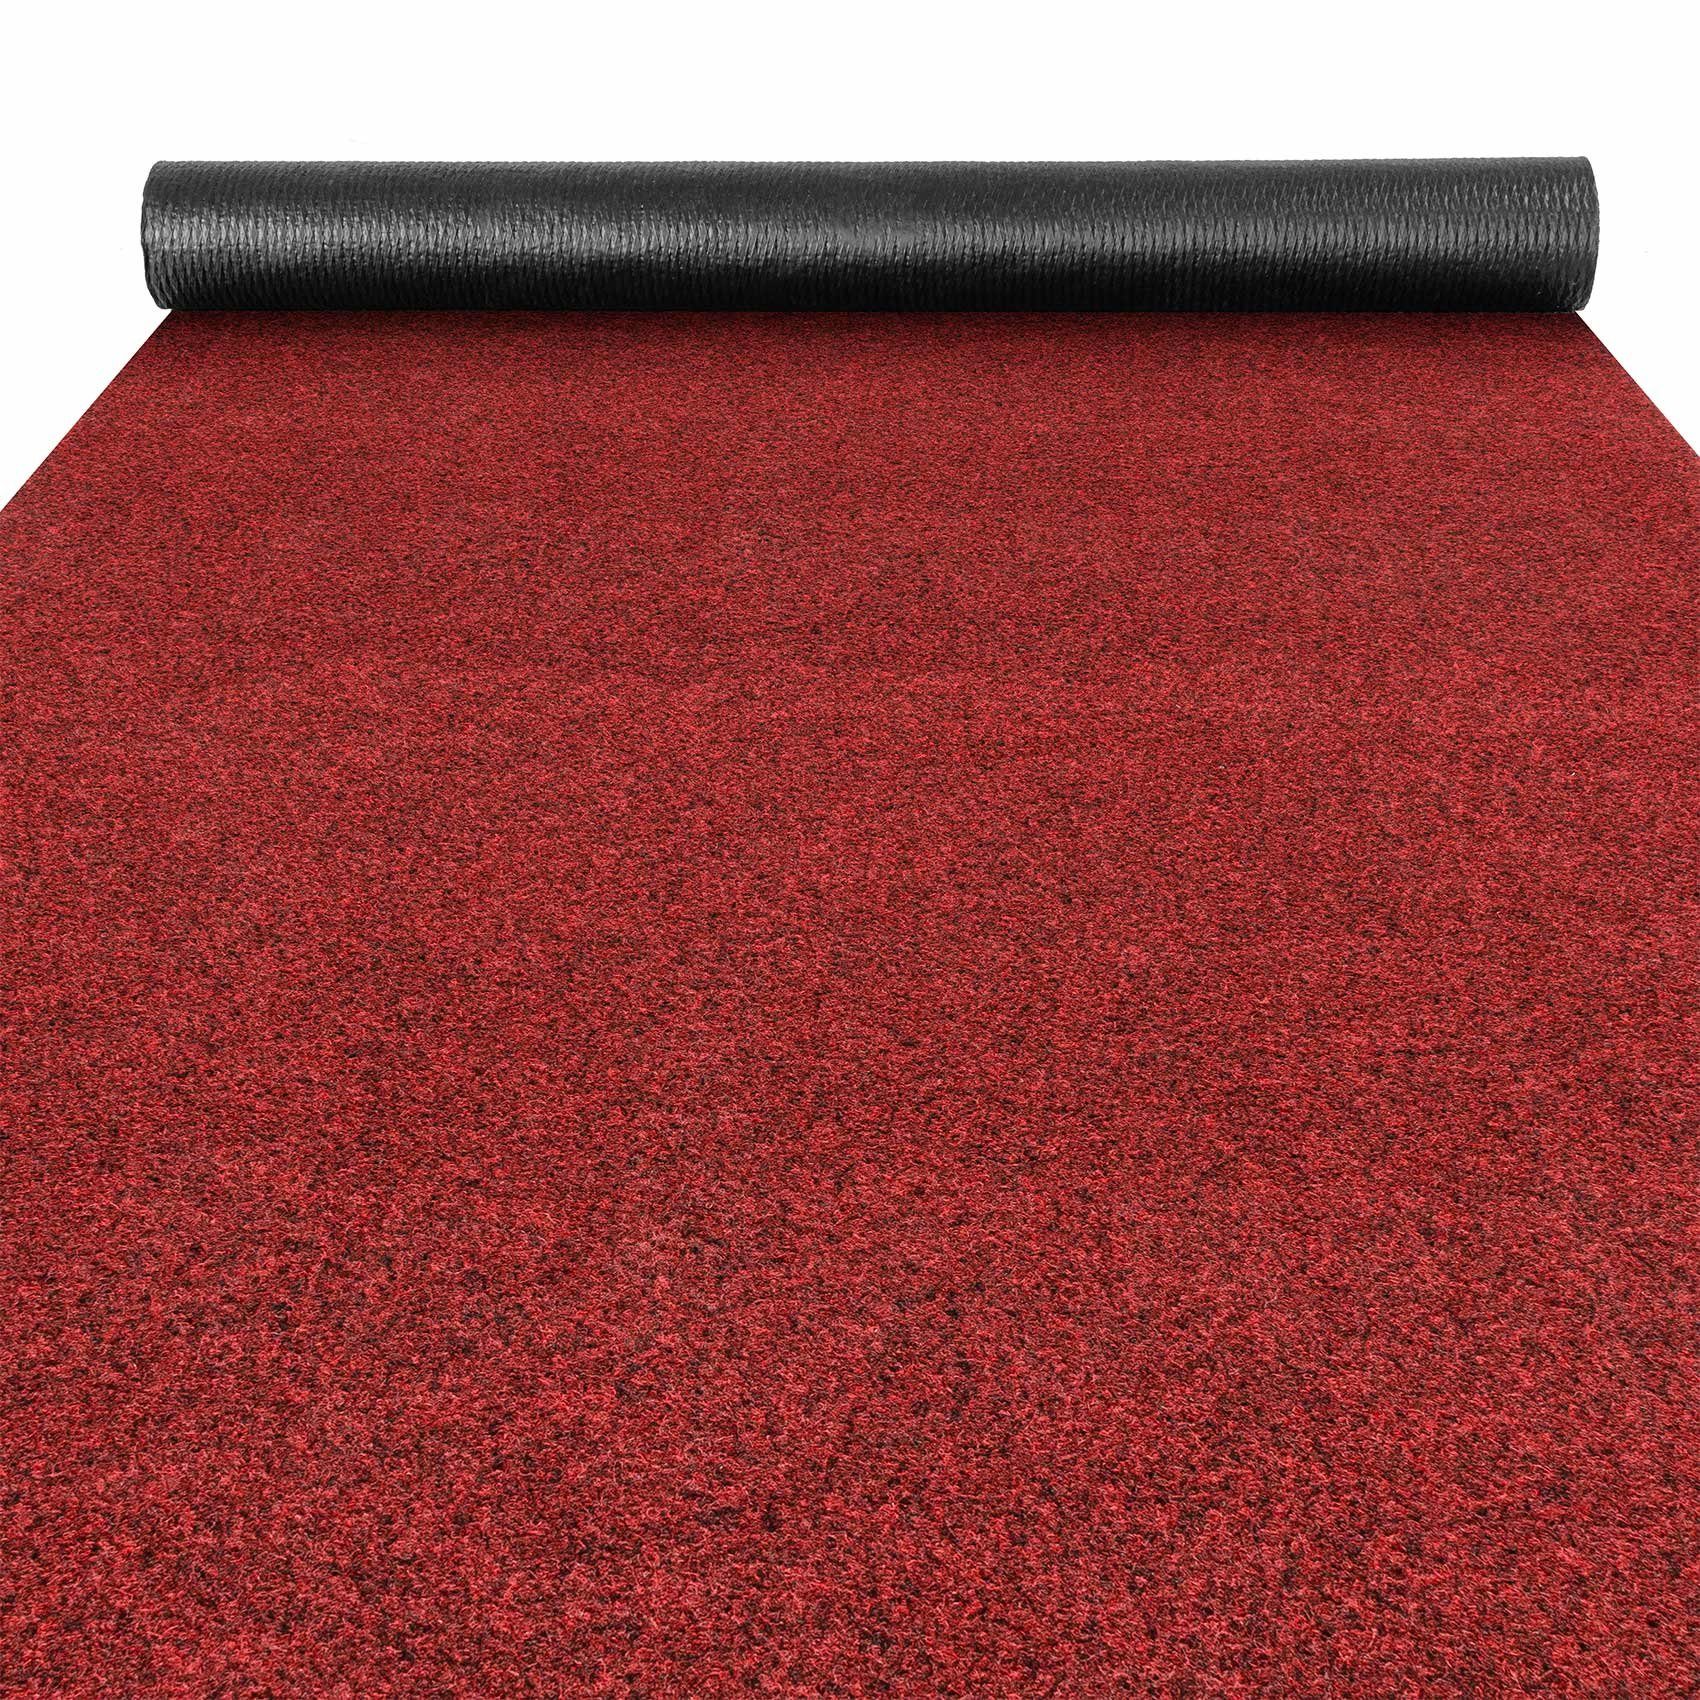 Läufer Textil Kräusel Rot, Höhe: Flurläufer POET Rechteckig, Teppichläufer Läufer mm, Vorleger 5 Teppich ANRO,